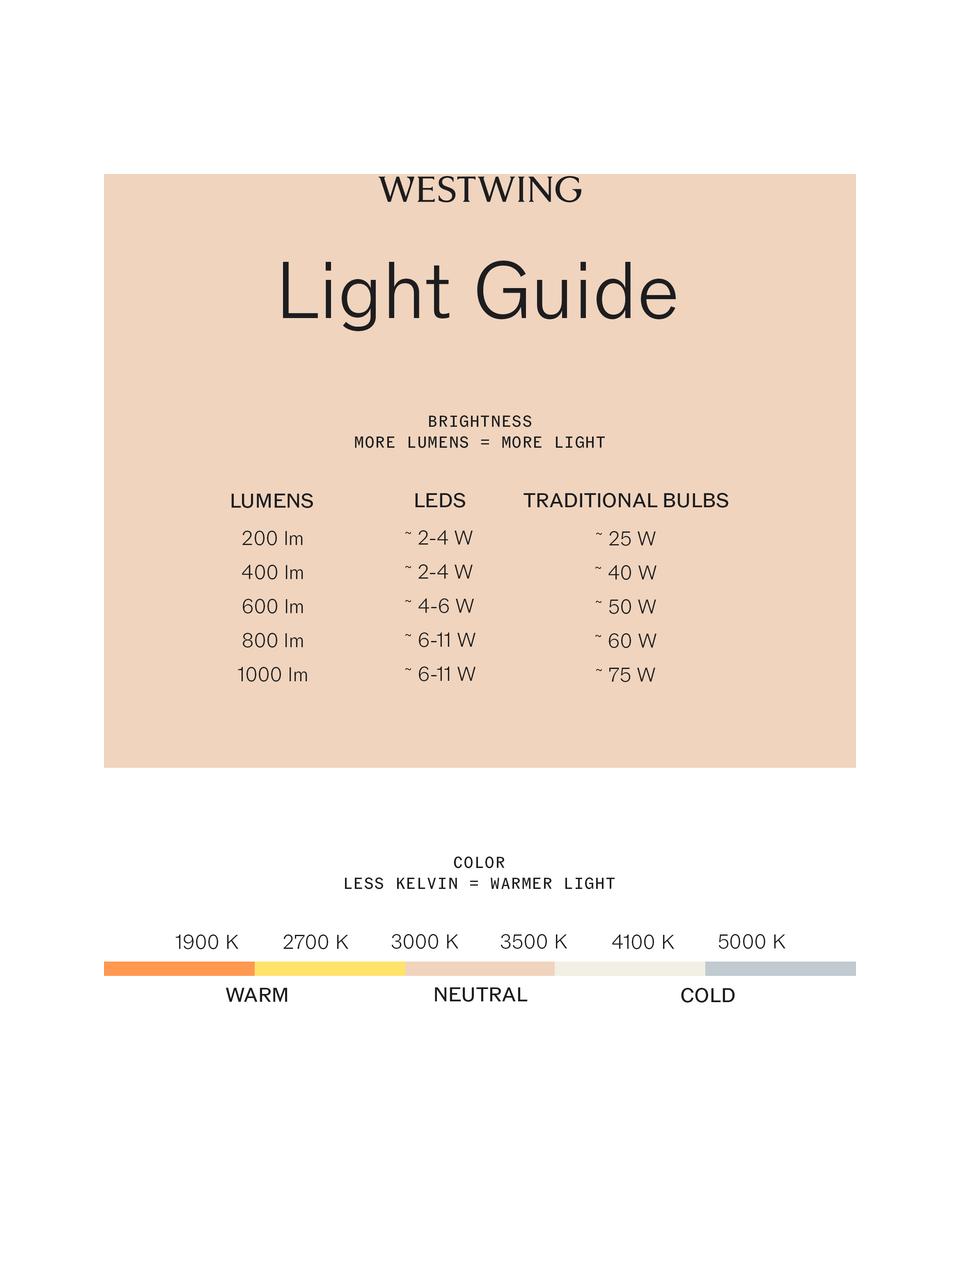 Handgemaakte LED tafellamp Equatore, Lampenkap: glas, gegalvaniseerd meta, Transparant, zwart, Ø 24 x H 43 cm